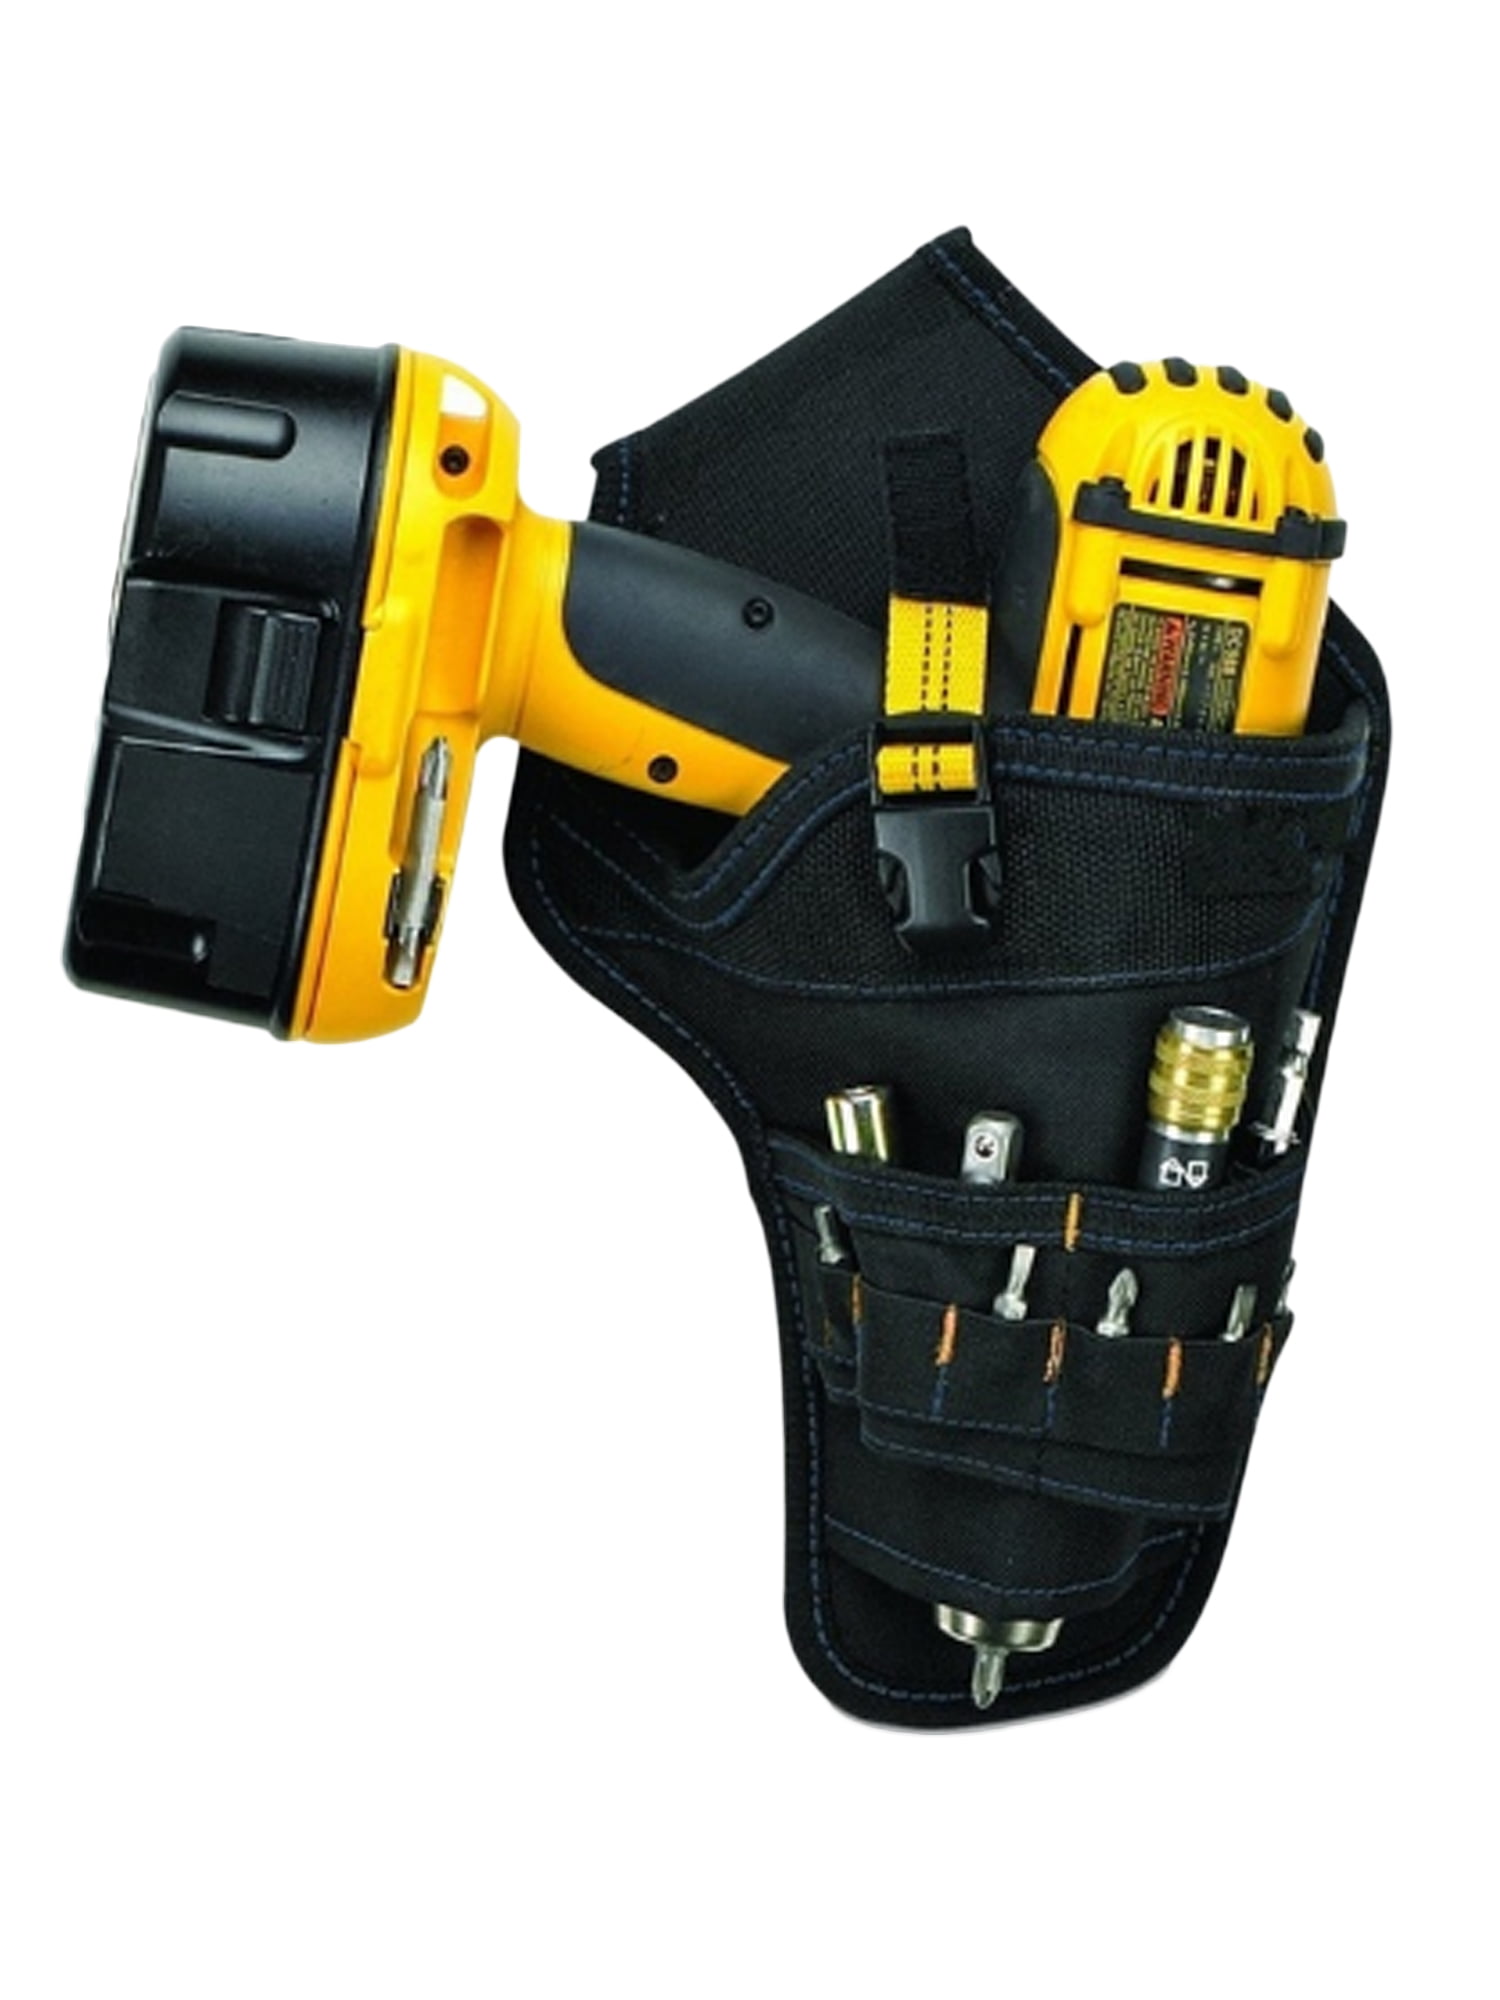 Pocket For Drill Holster Cordless Tool Holder Heavy Duty Belt Pouch Bag Black 